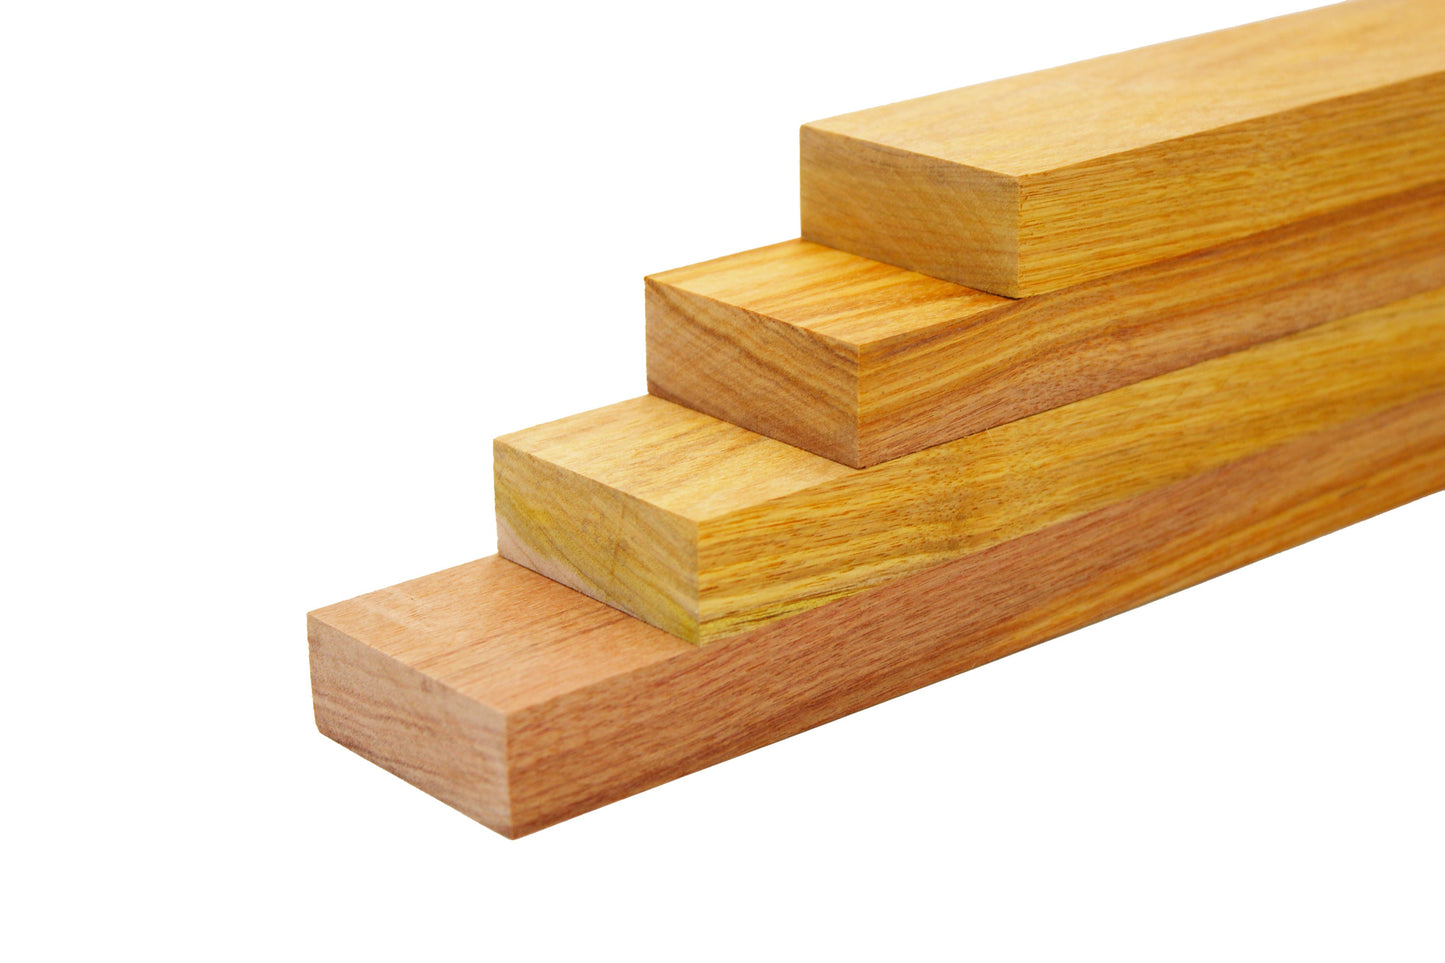 Canarywood Lumber Boards 3/4" x 2" (4pcs)